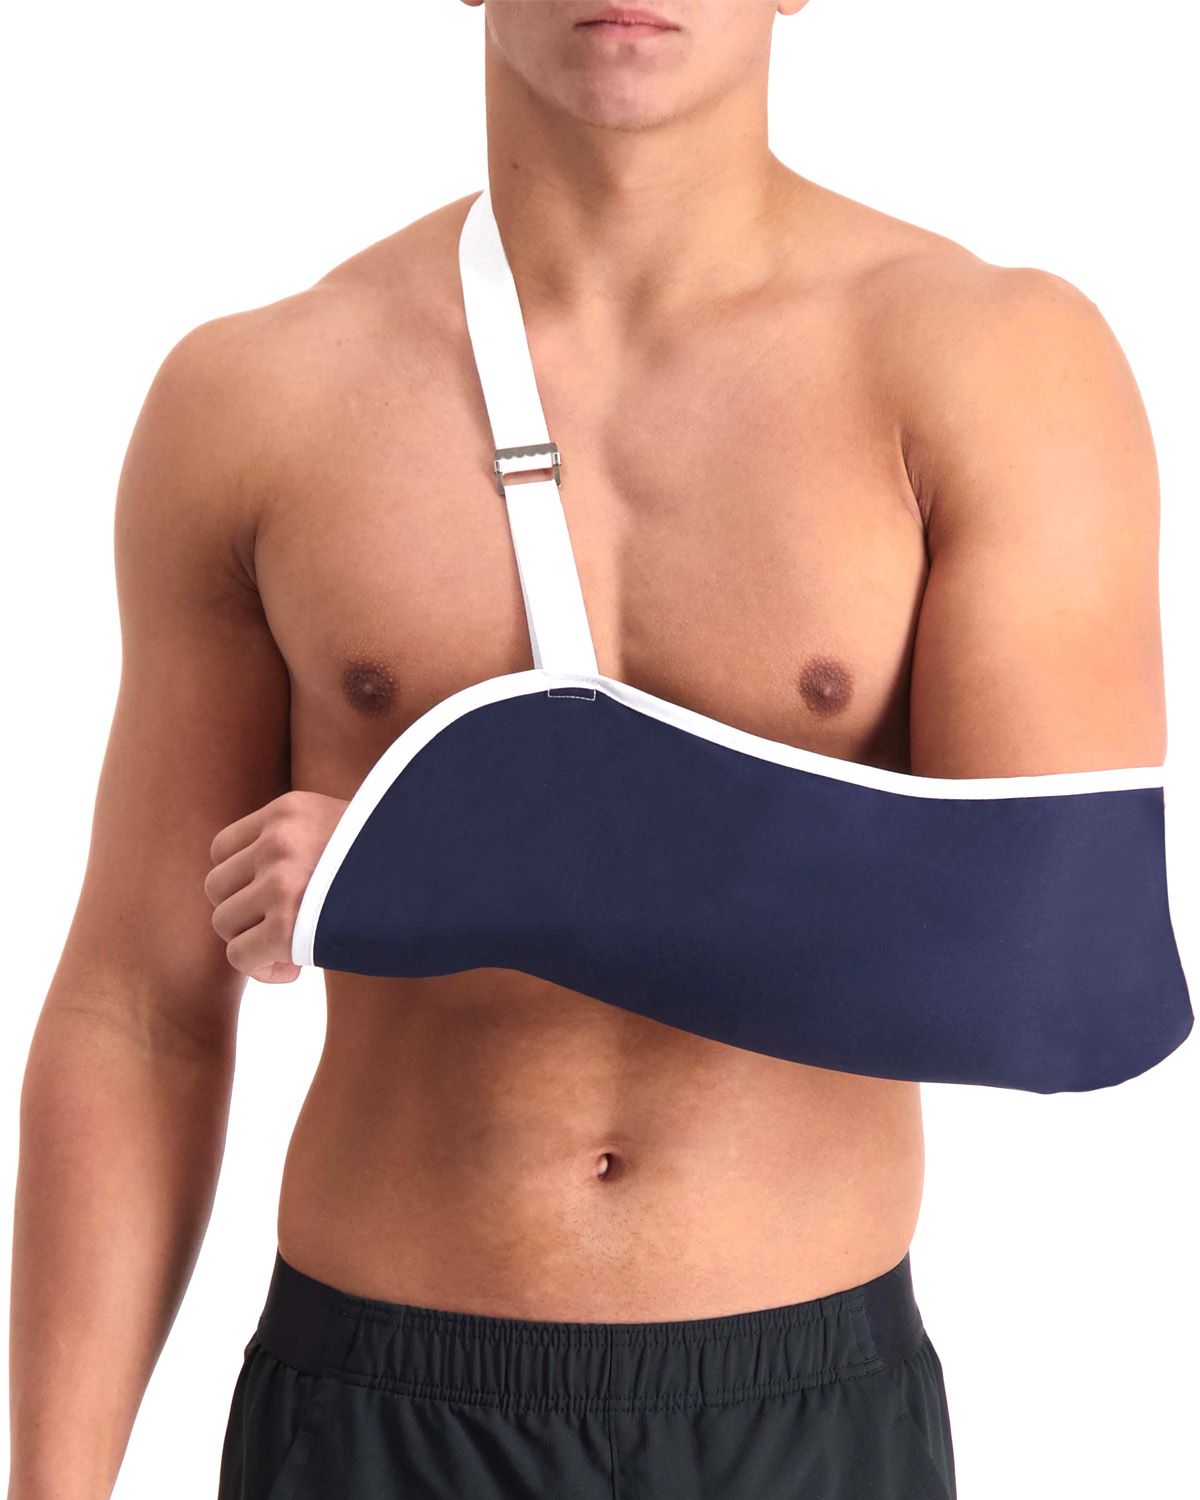 Dunimed arm sling for sale